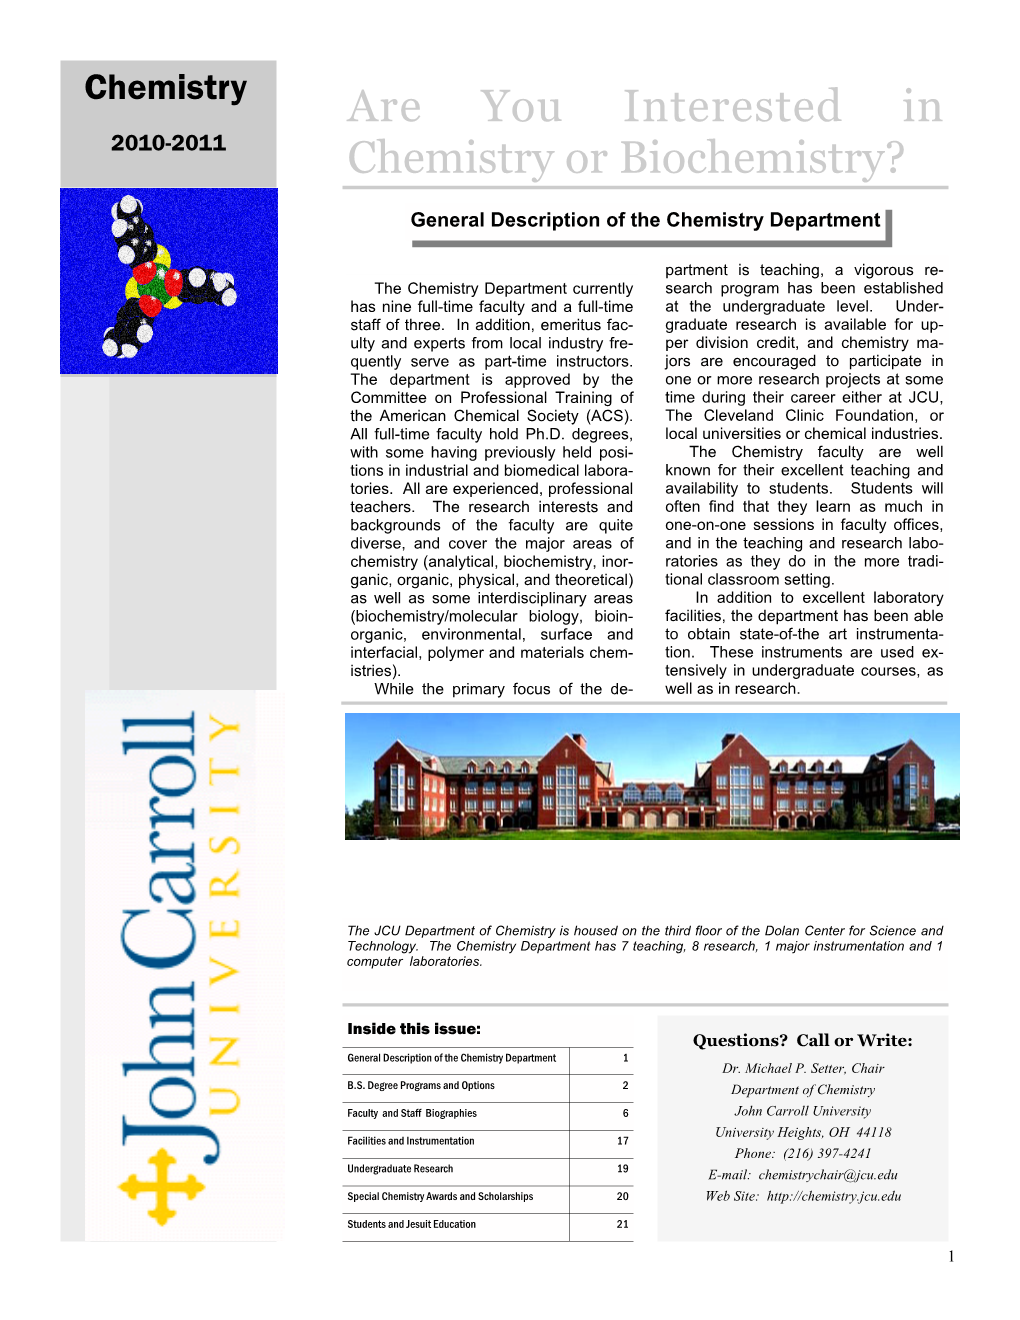 Chemistry Brochure 2010-2011.Pub